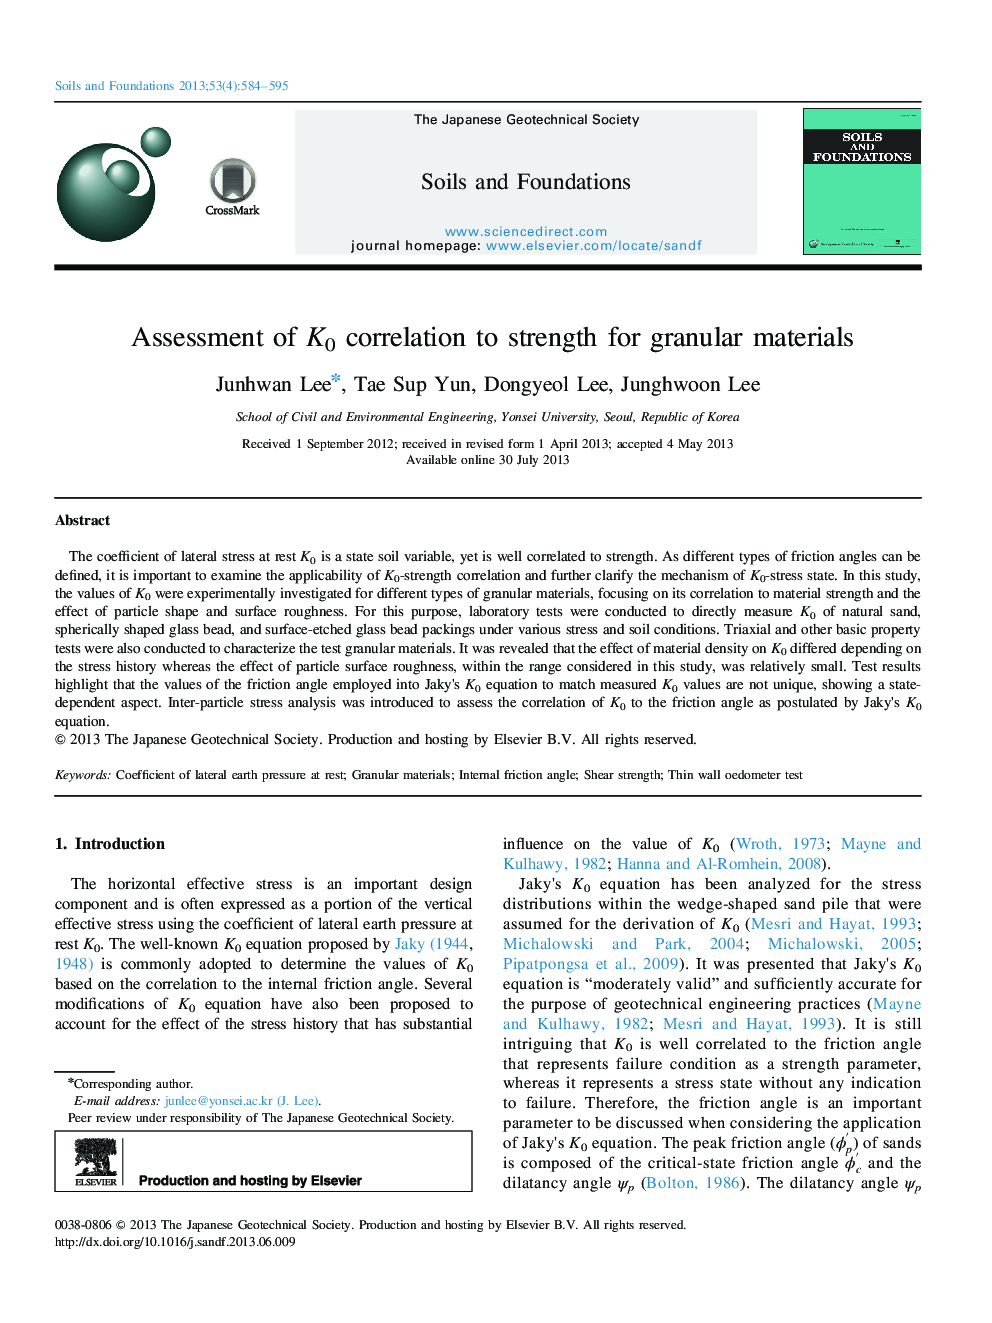 Assessment of K0 correlation to strength for granular materials 